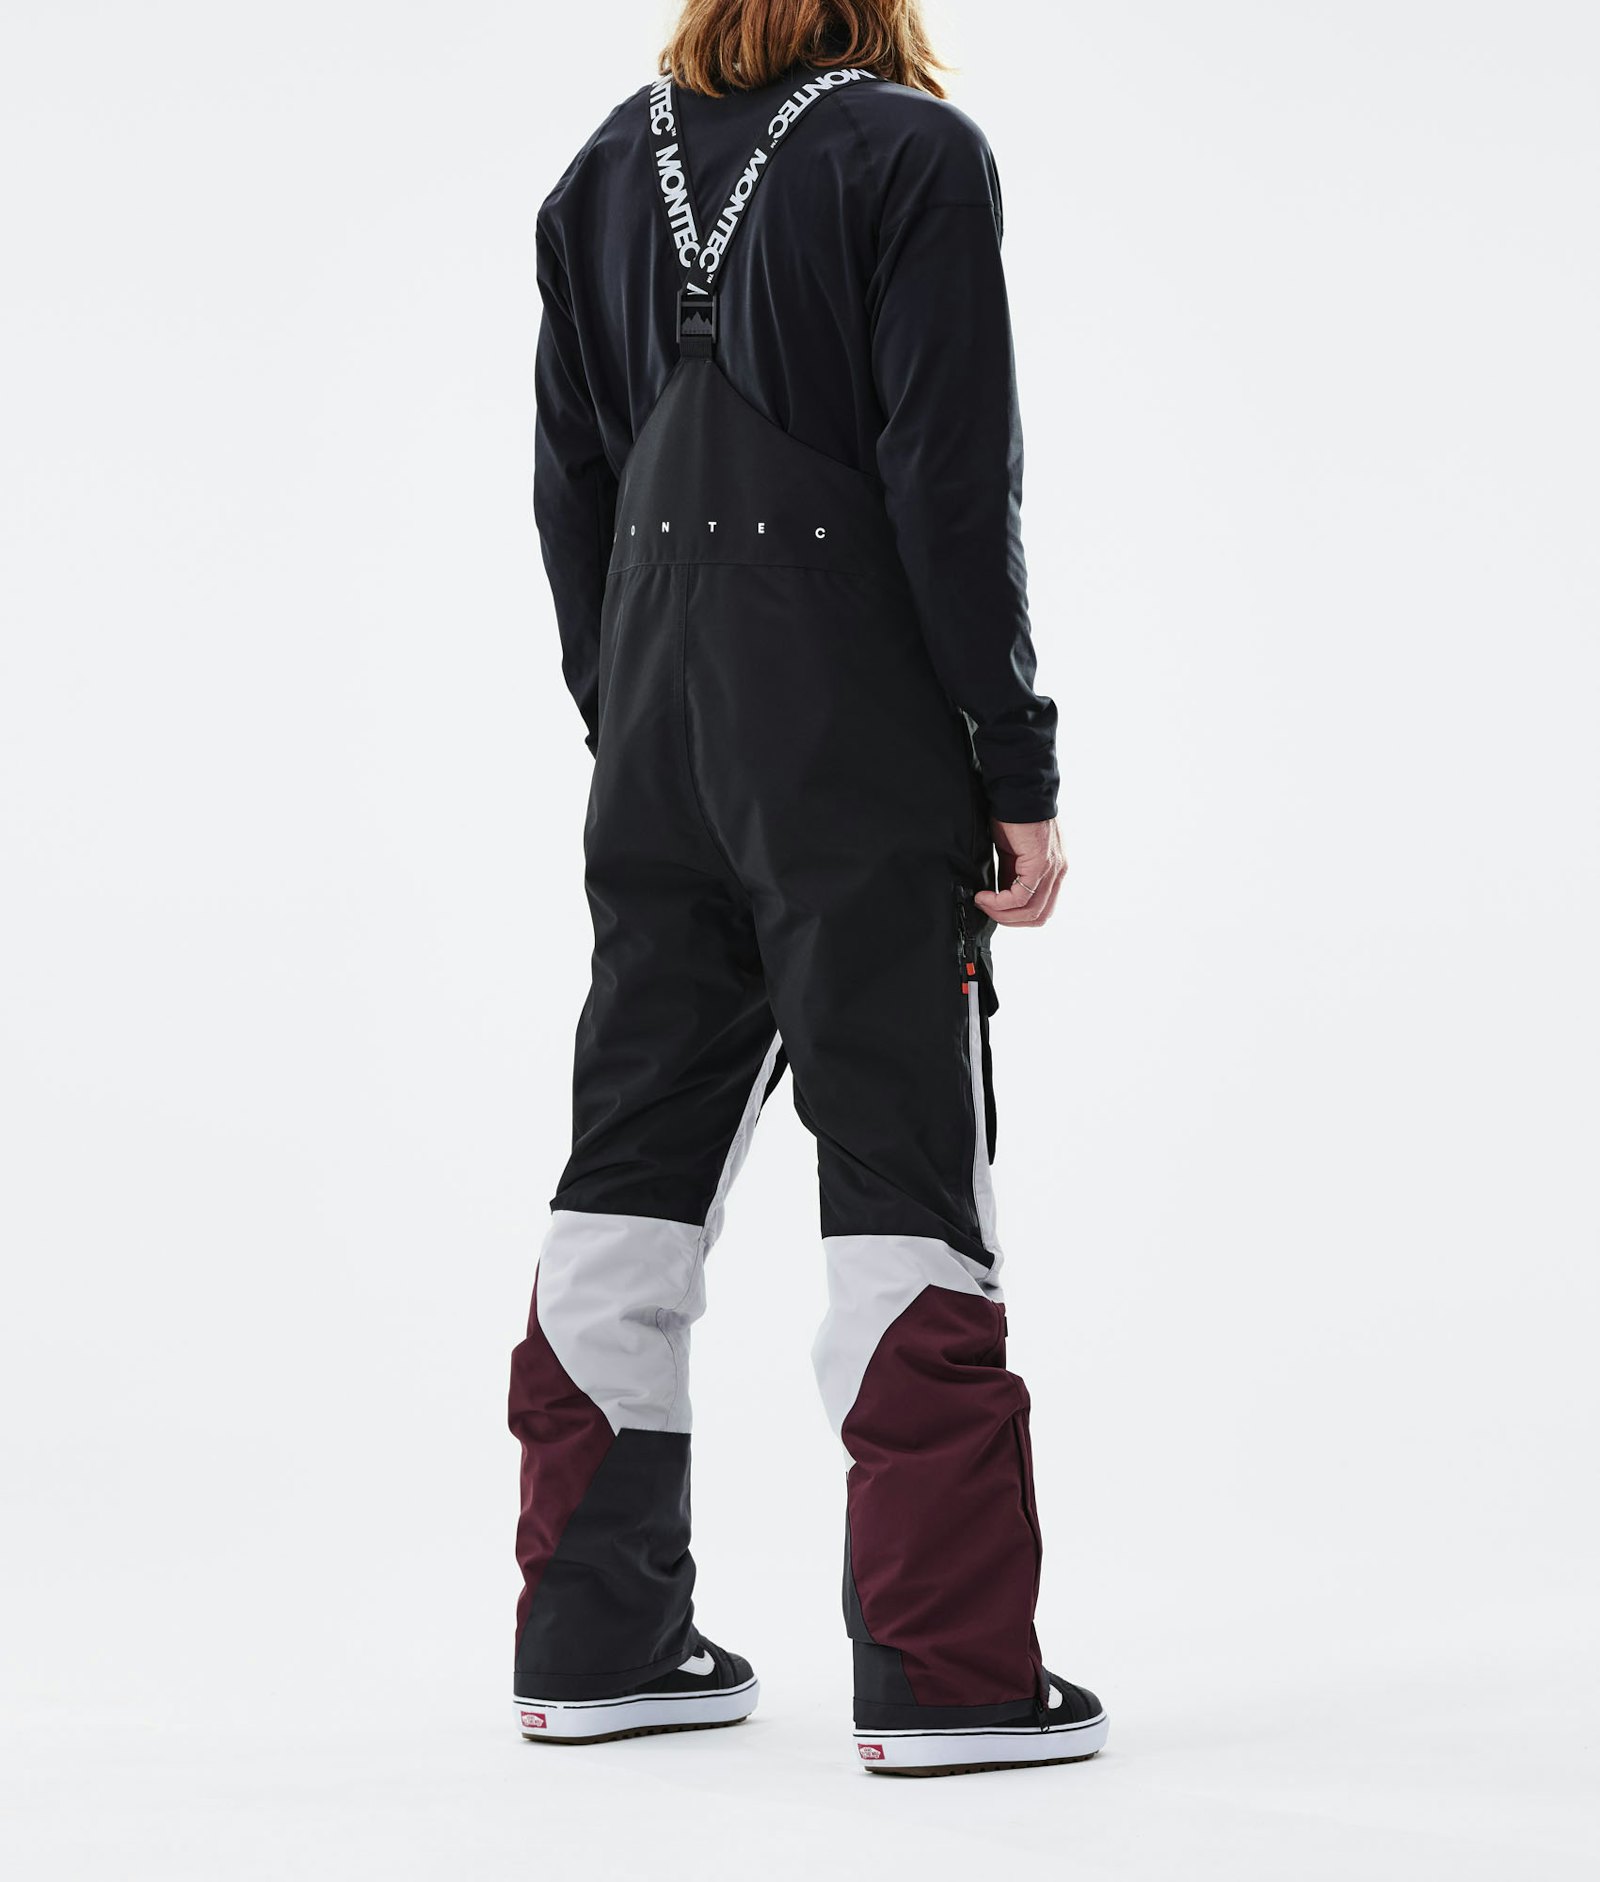 Fawk 2021 Pantalon de Snowboard Homme Black/Light Grey/Burgundy